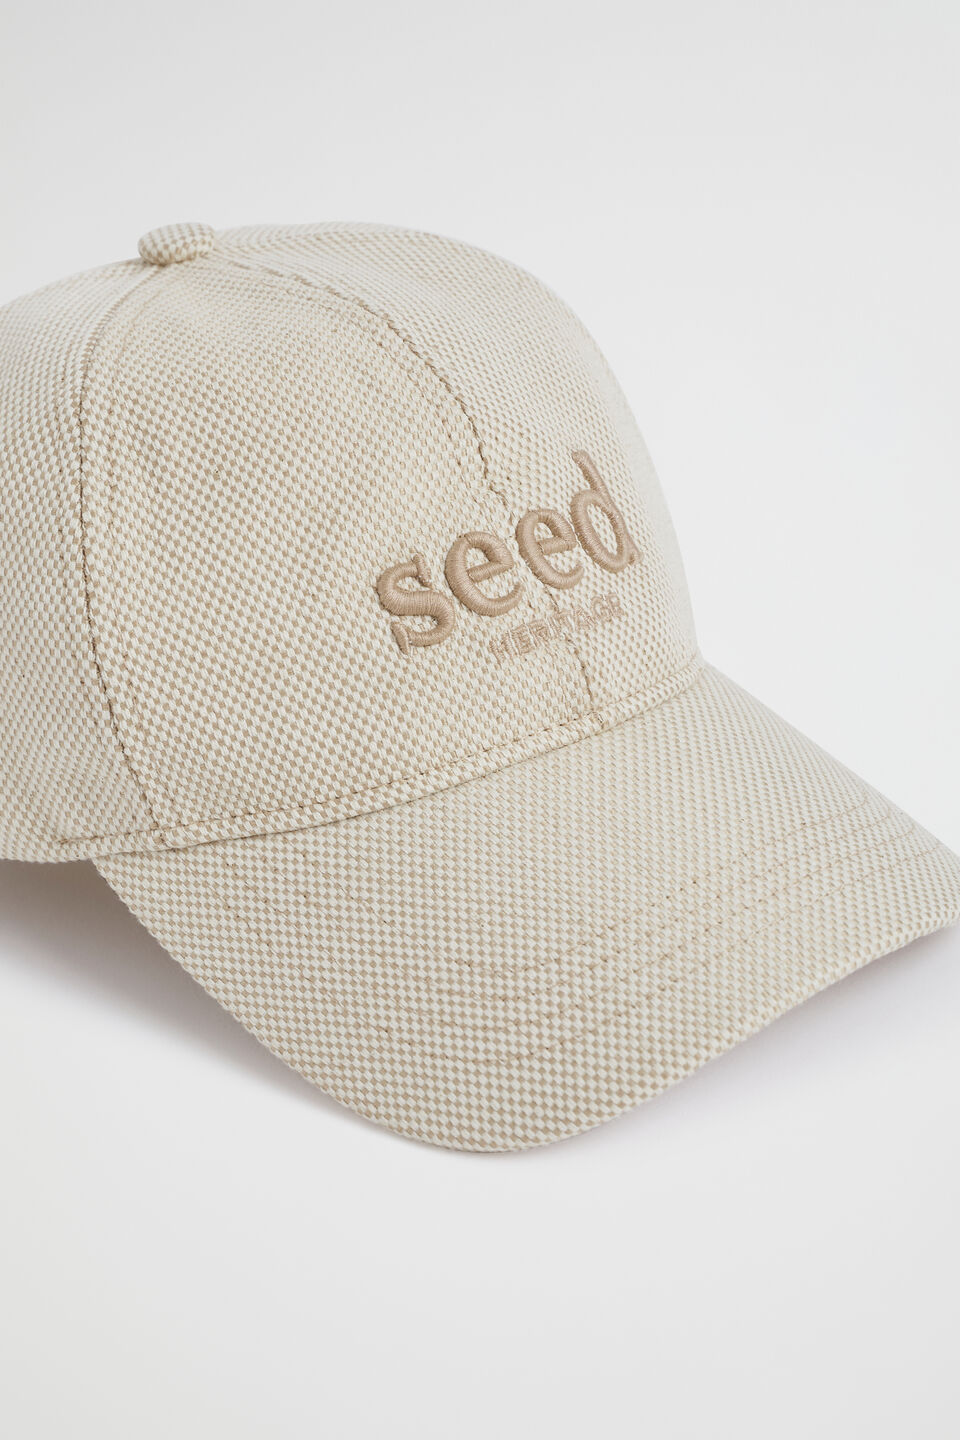 Seed Cap  Natural